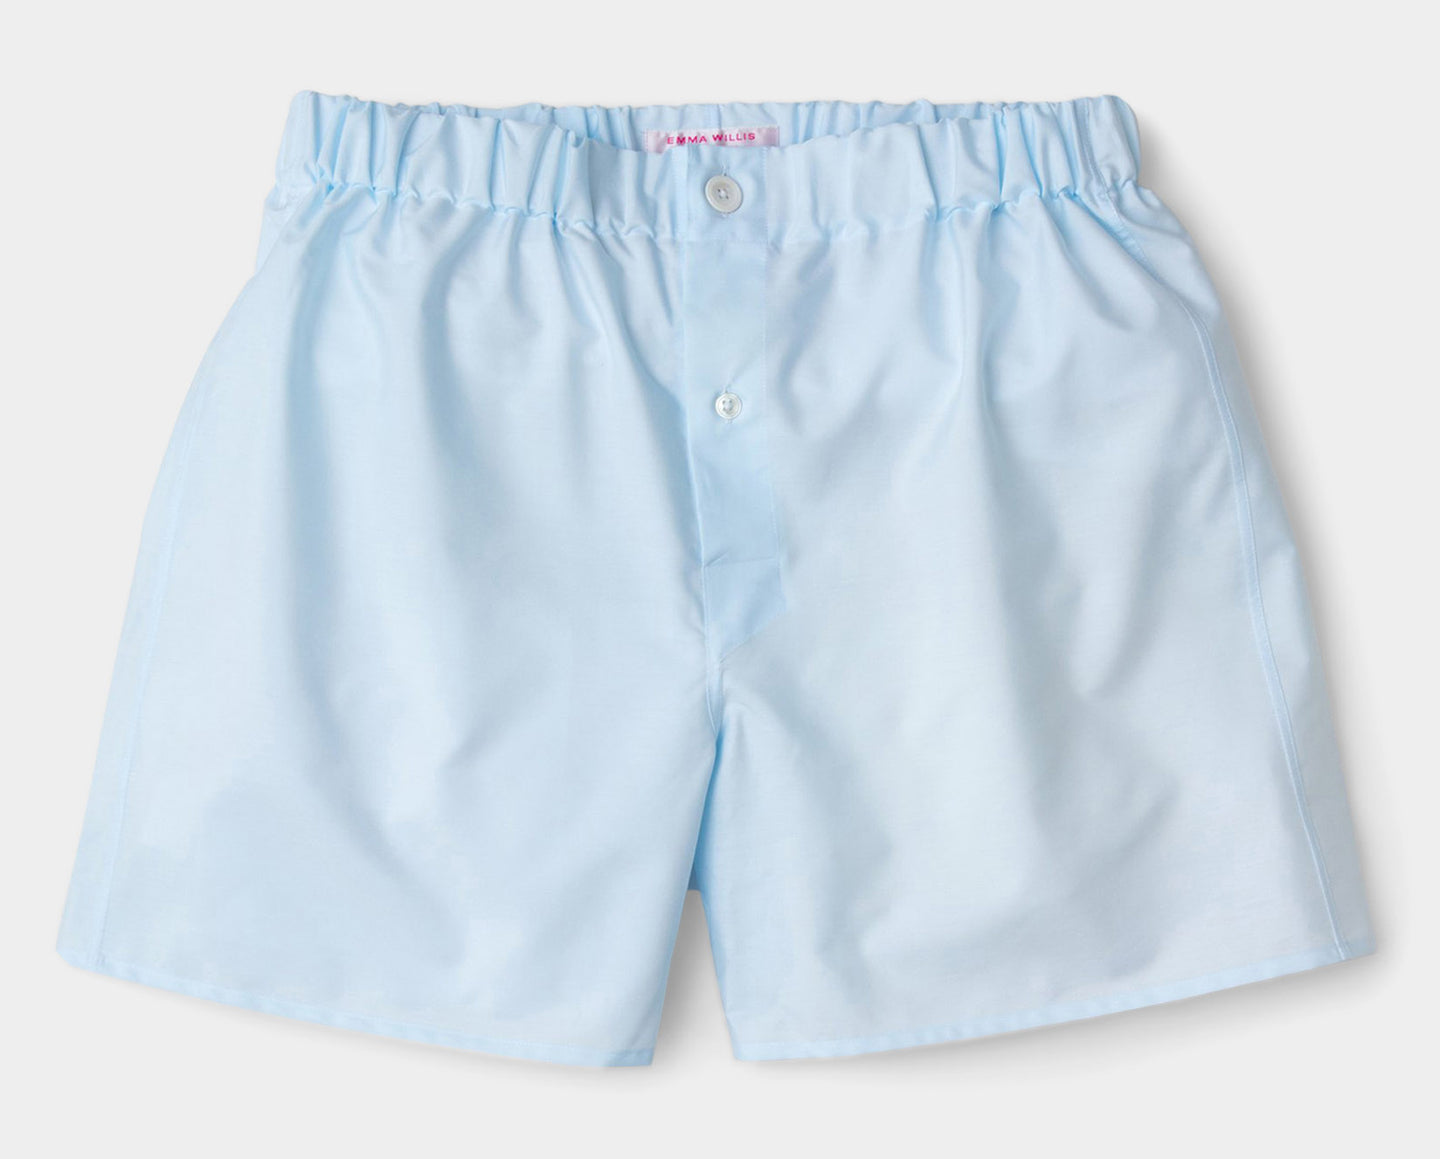 Ice Blue Superior Cotton Boxer Shorts - Slim Fit